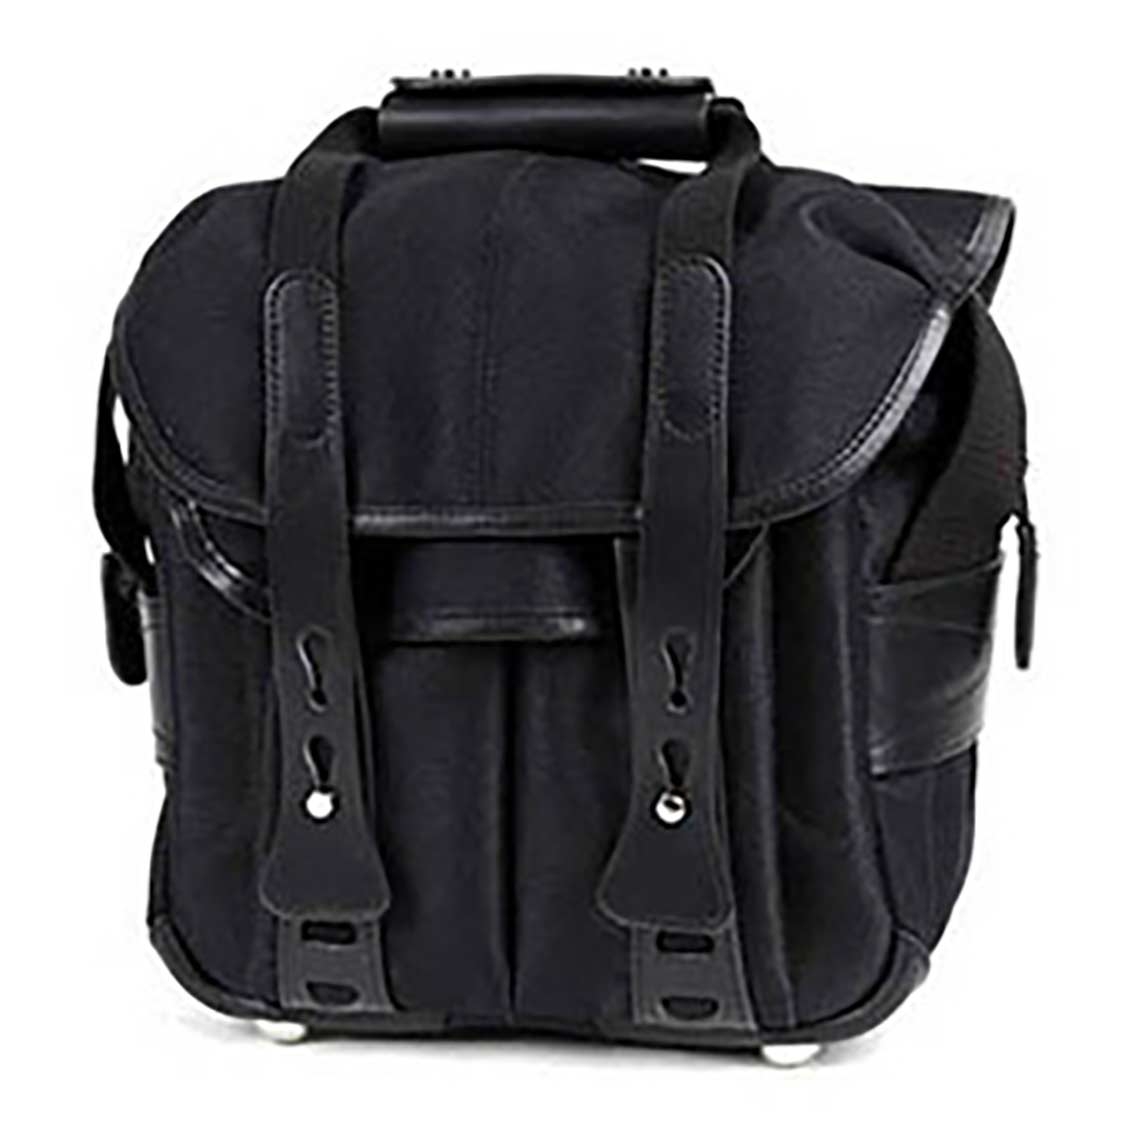 Billingham 107 Fibrenyte Shoulder Bag (black) | McBain Camera